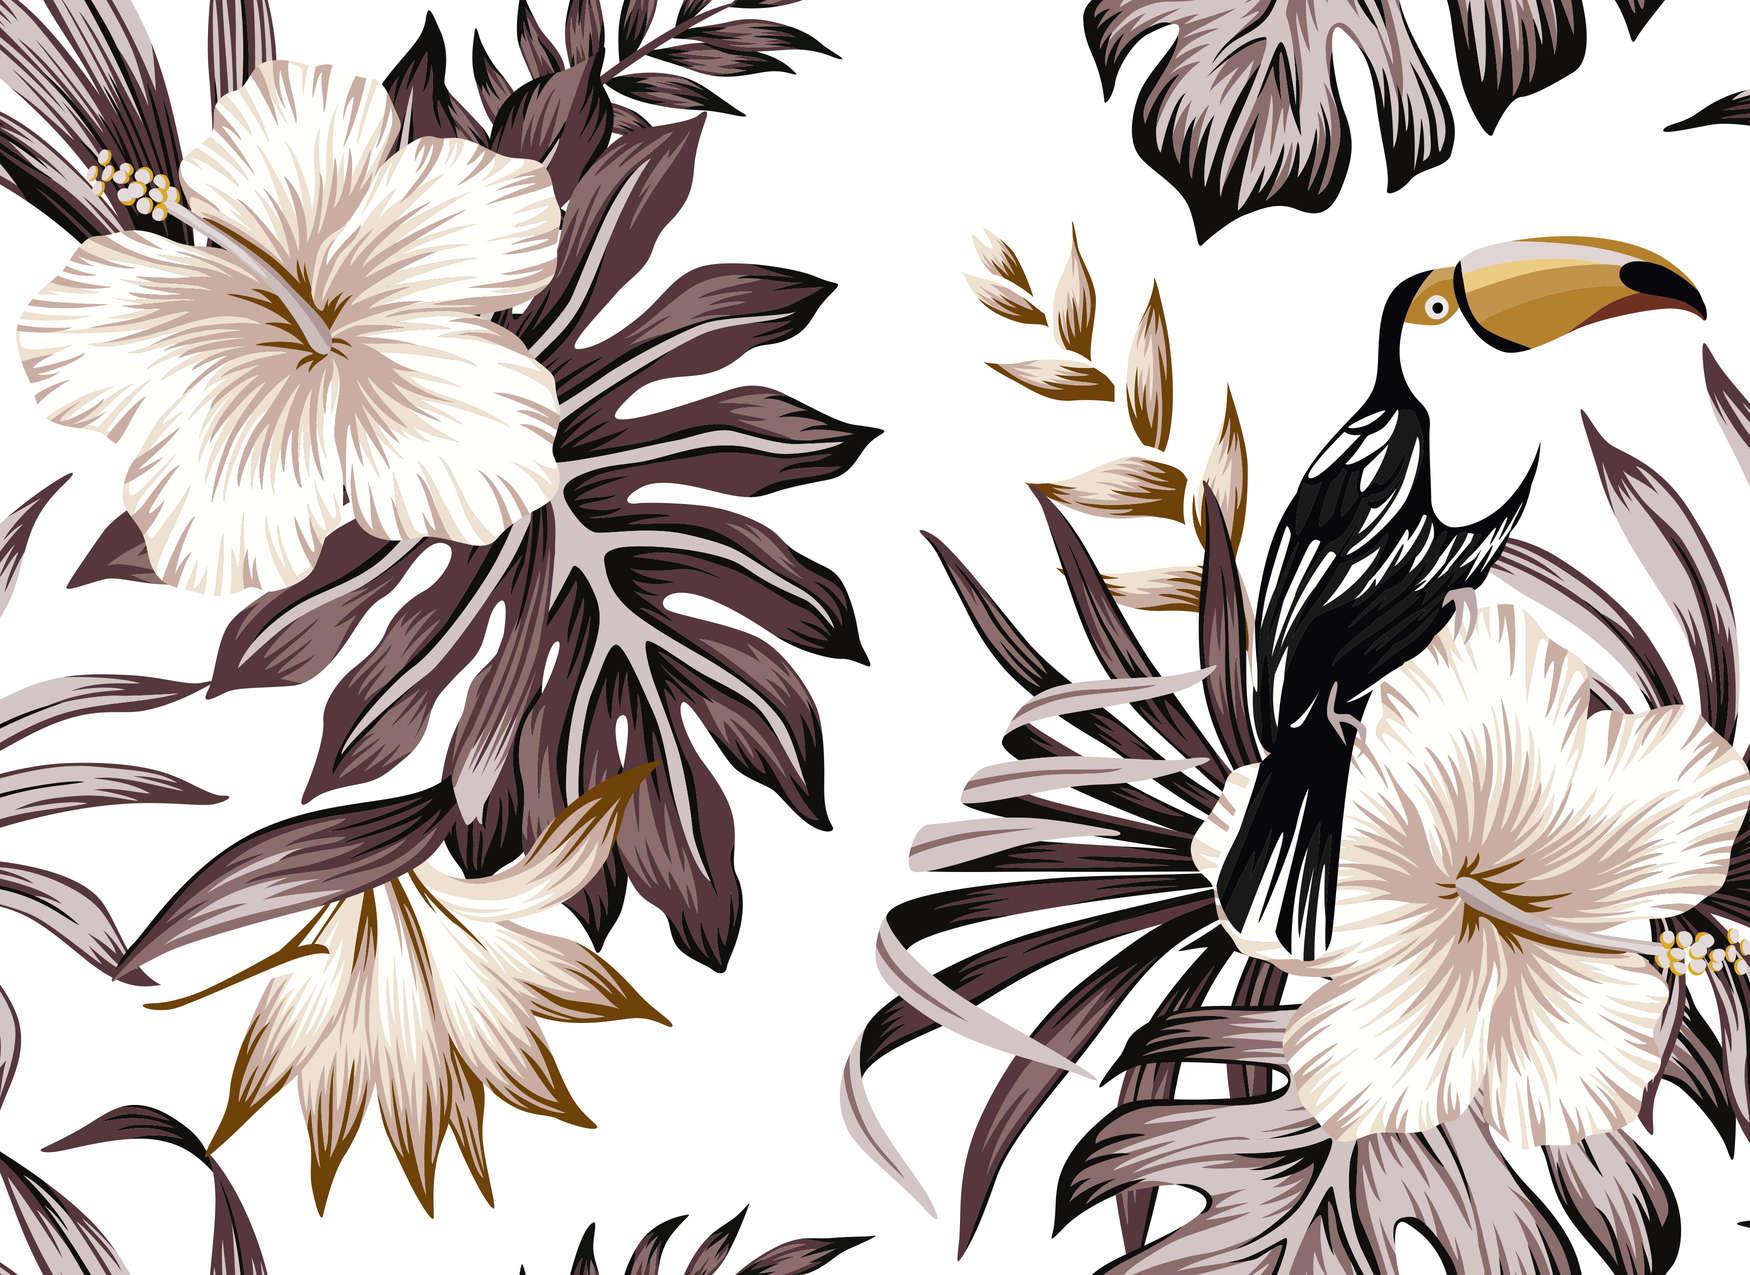             Jungle Plants and Pelican - Grey, White, Black
        